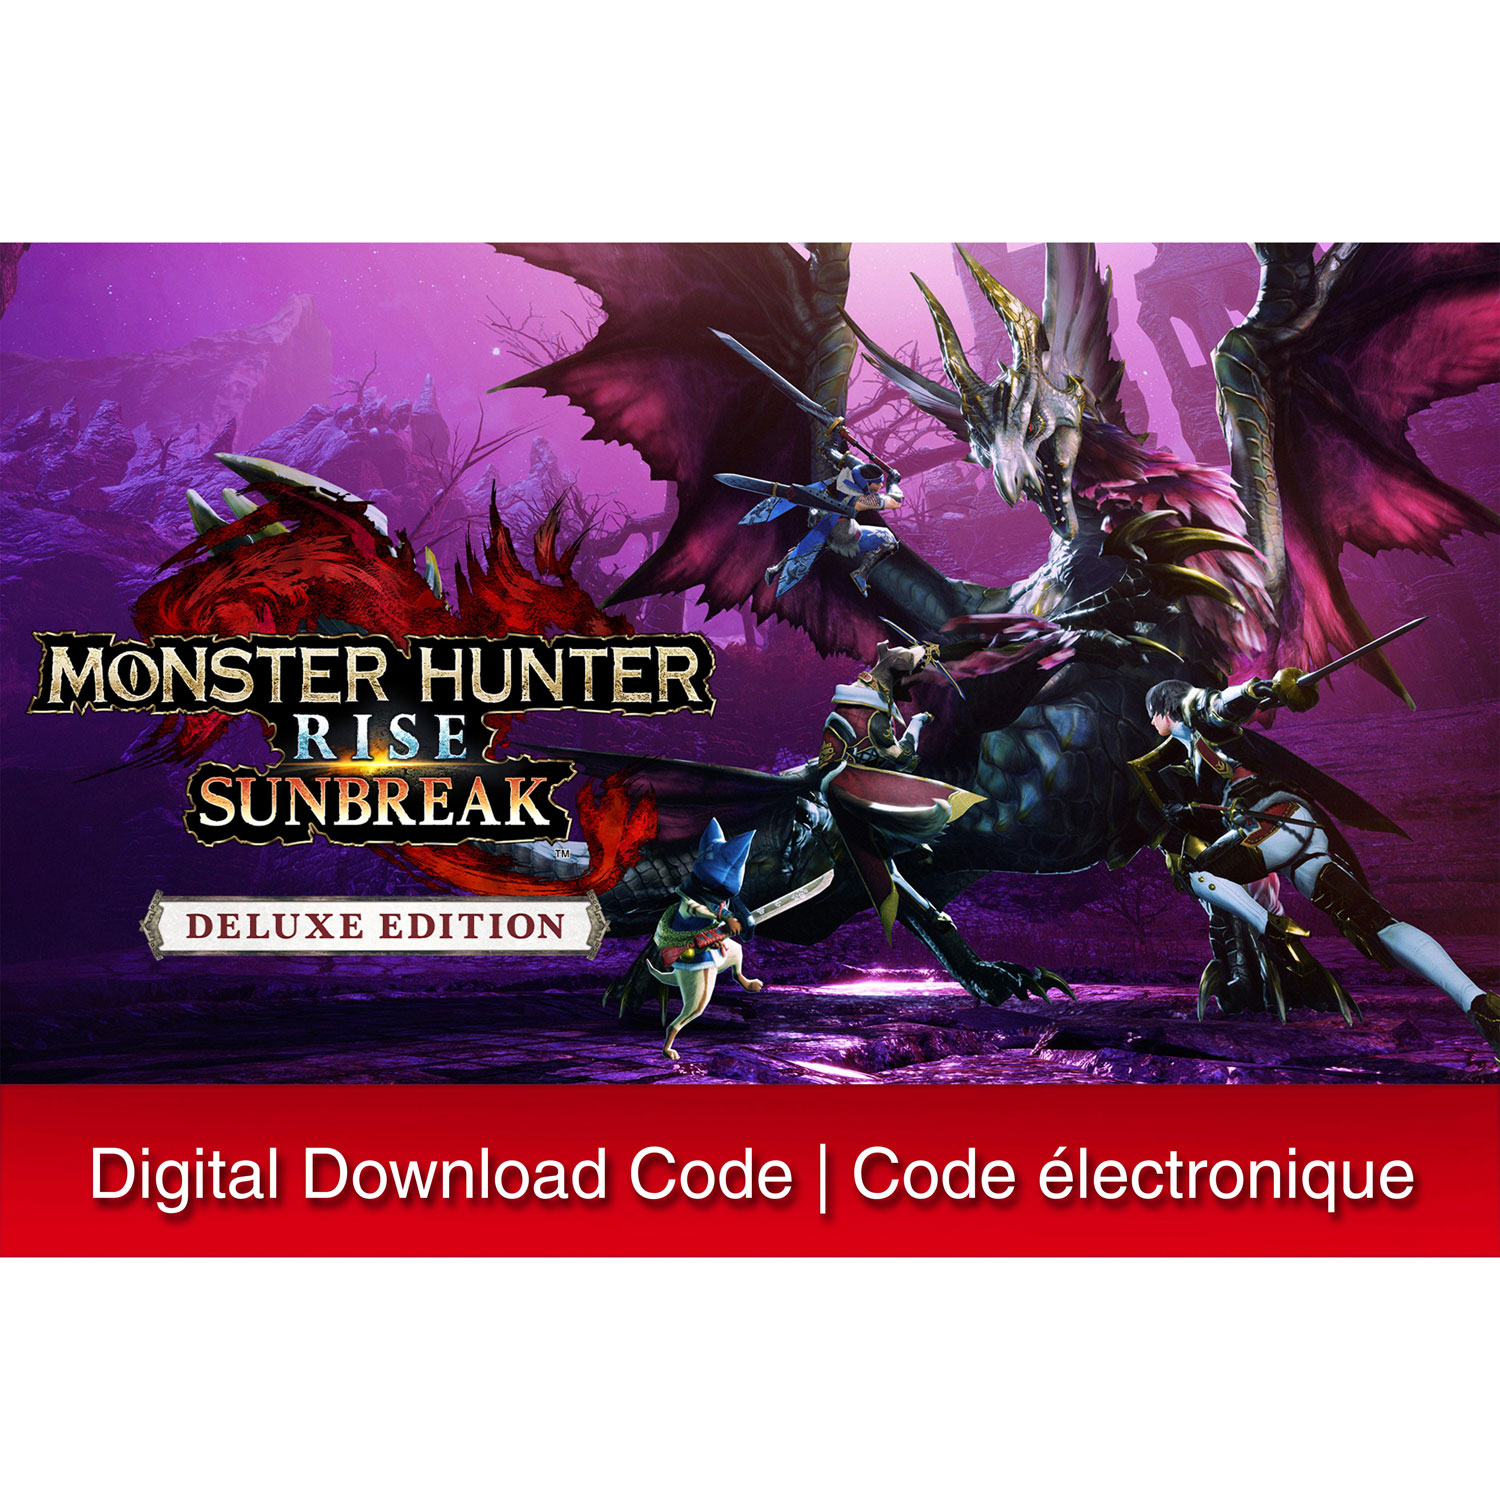 Monster Hunter Rise: Sunbreak Deluxe Edition (Switch) - Digital Download